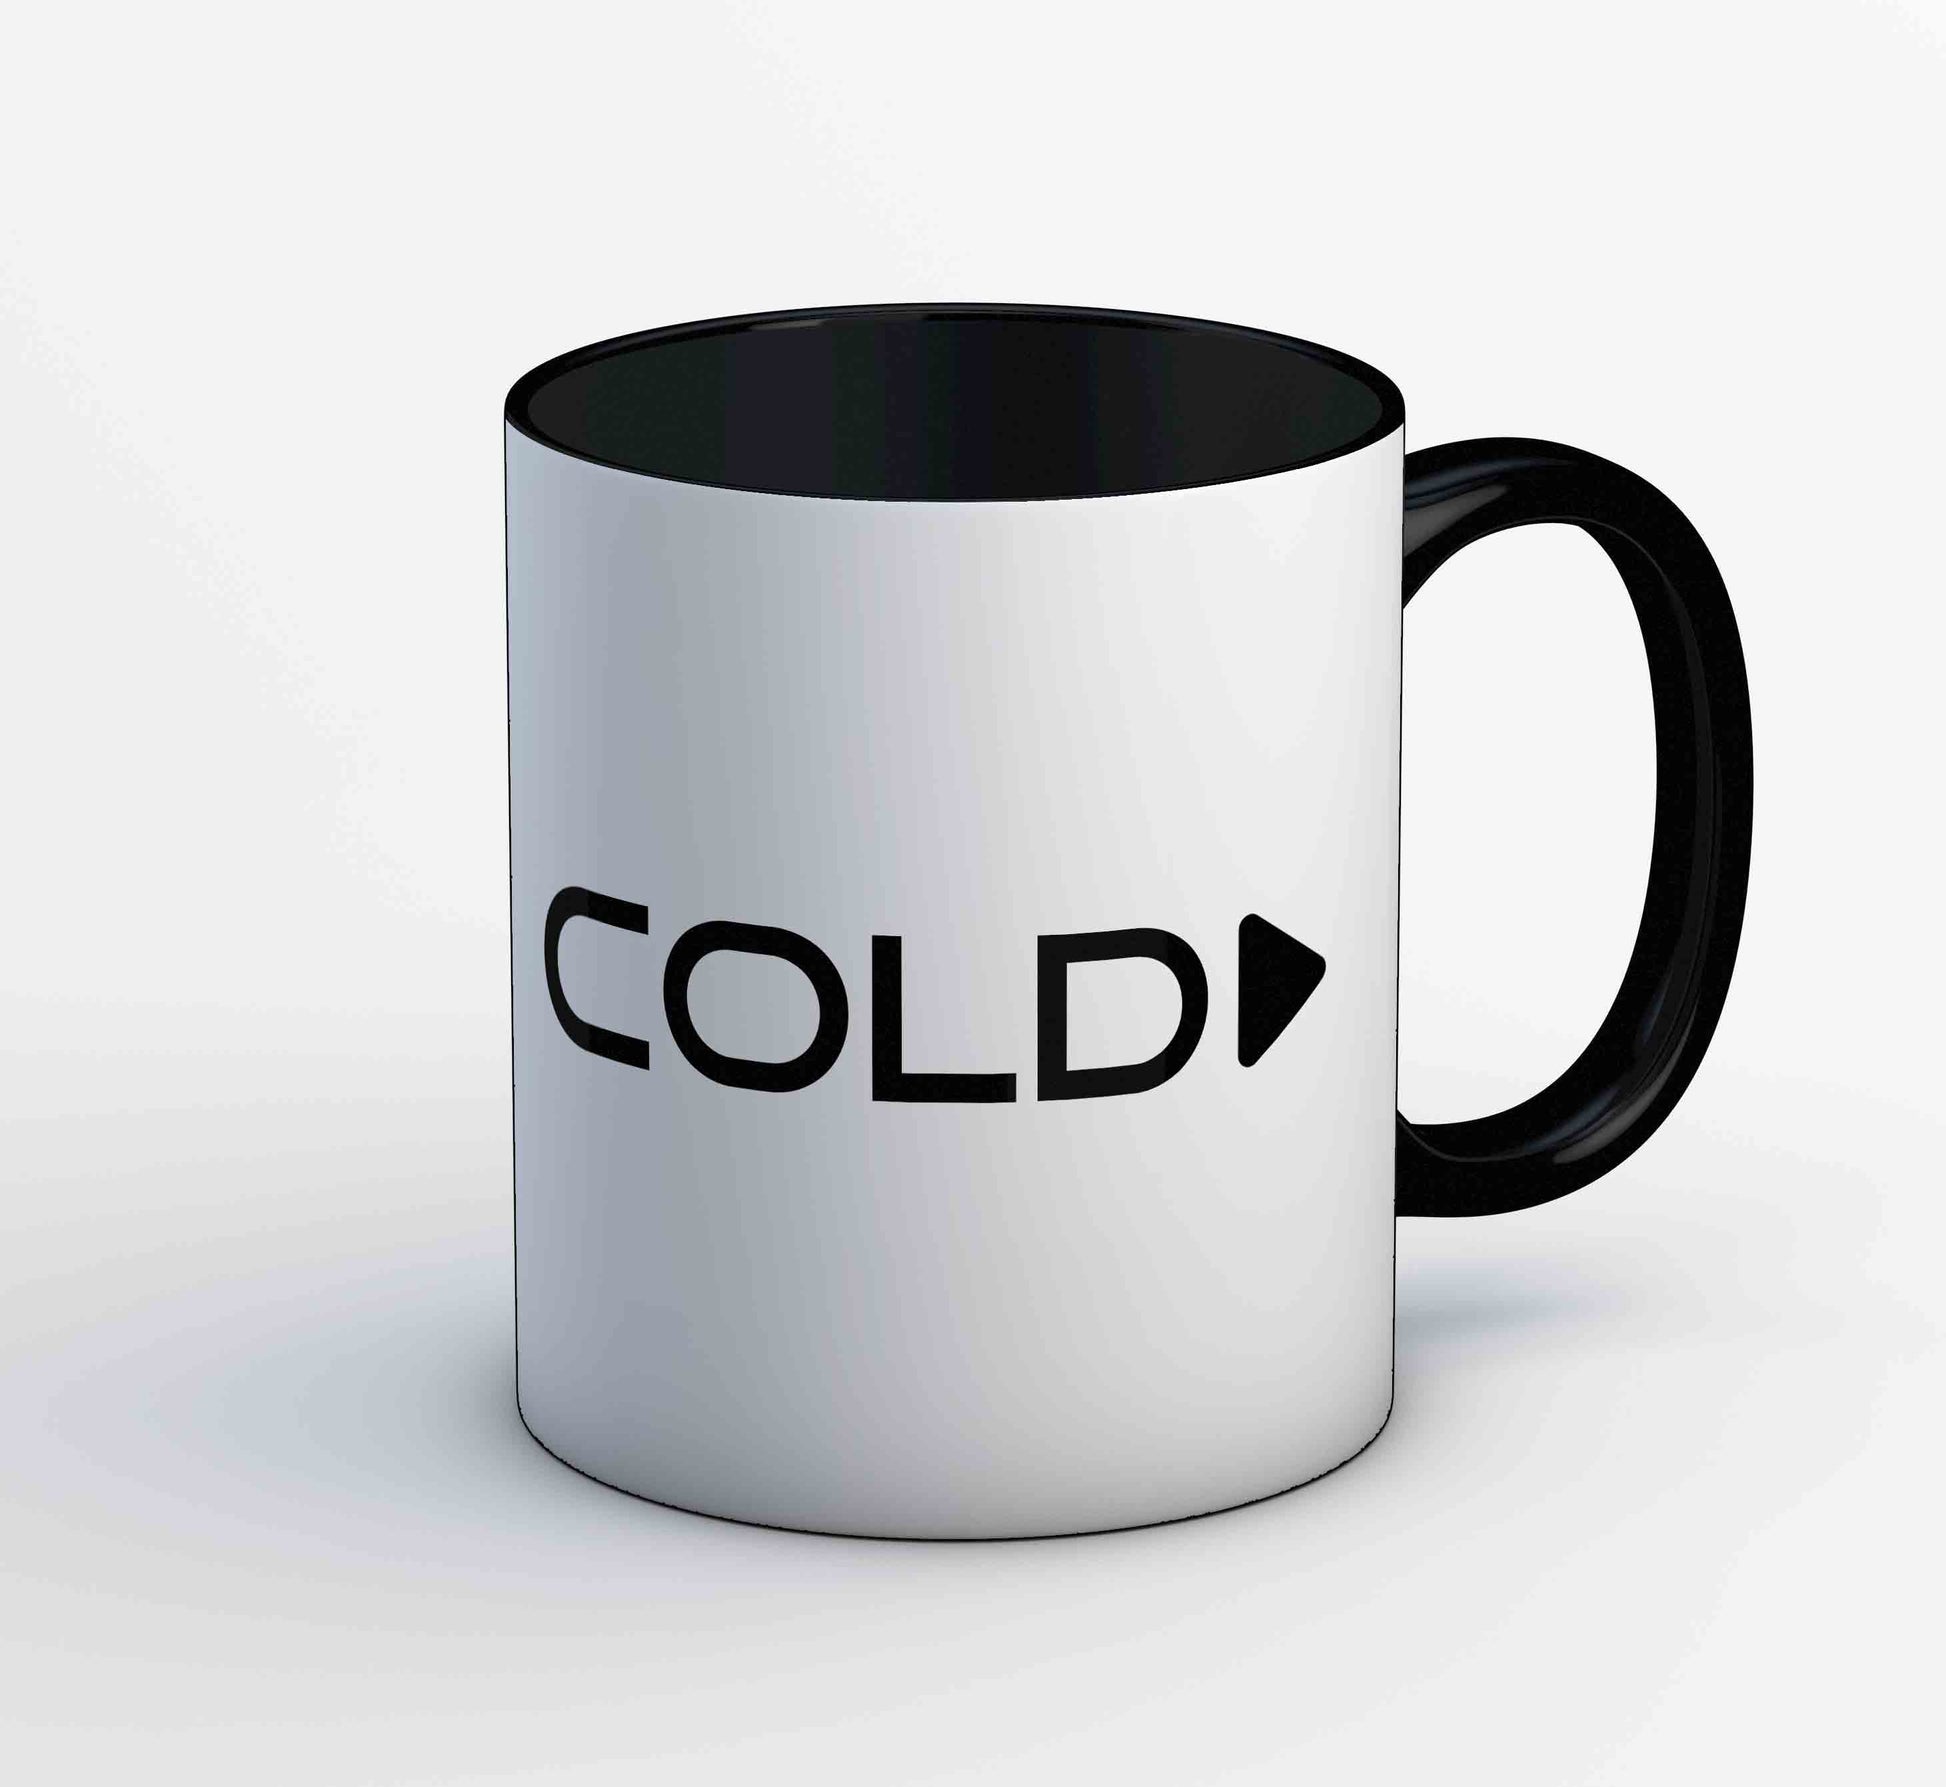 coldplay play mug coffee ceramic music band buy online india the banyan tee tbt men women girls boys unisex